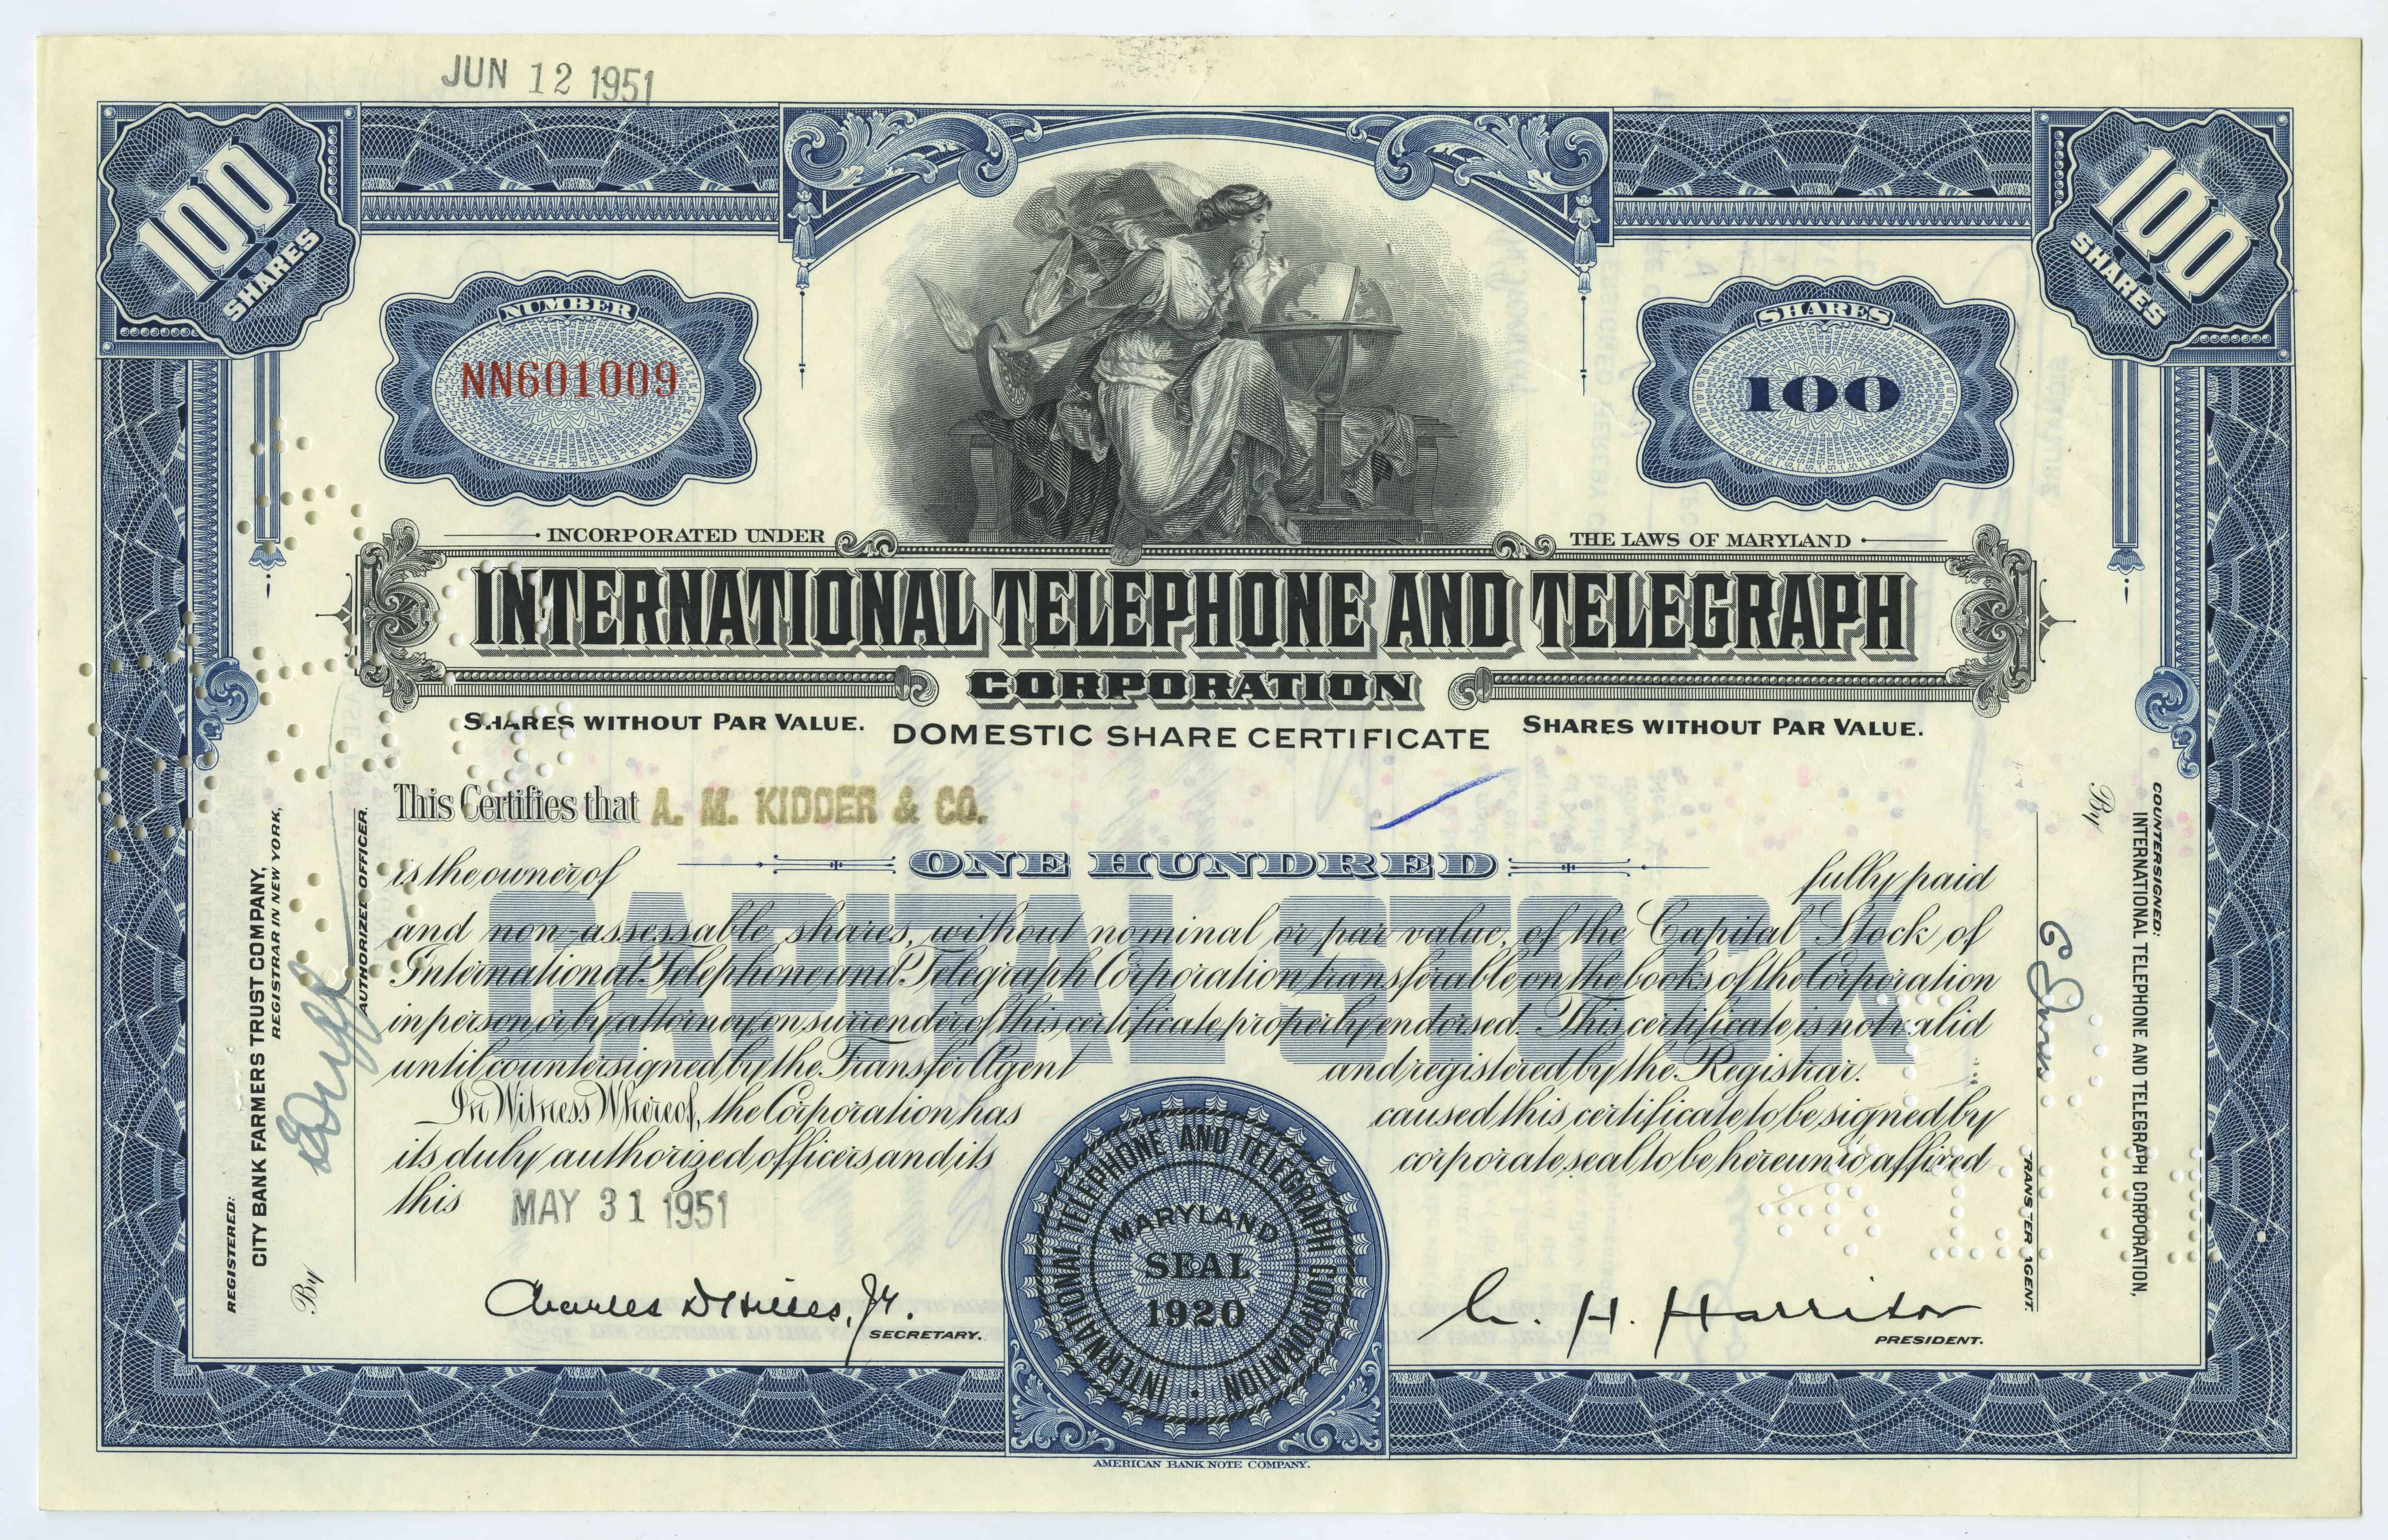 100 akcji spółki International Telephone and Telegraph Corporation z 31 maja 1951 roku